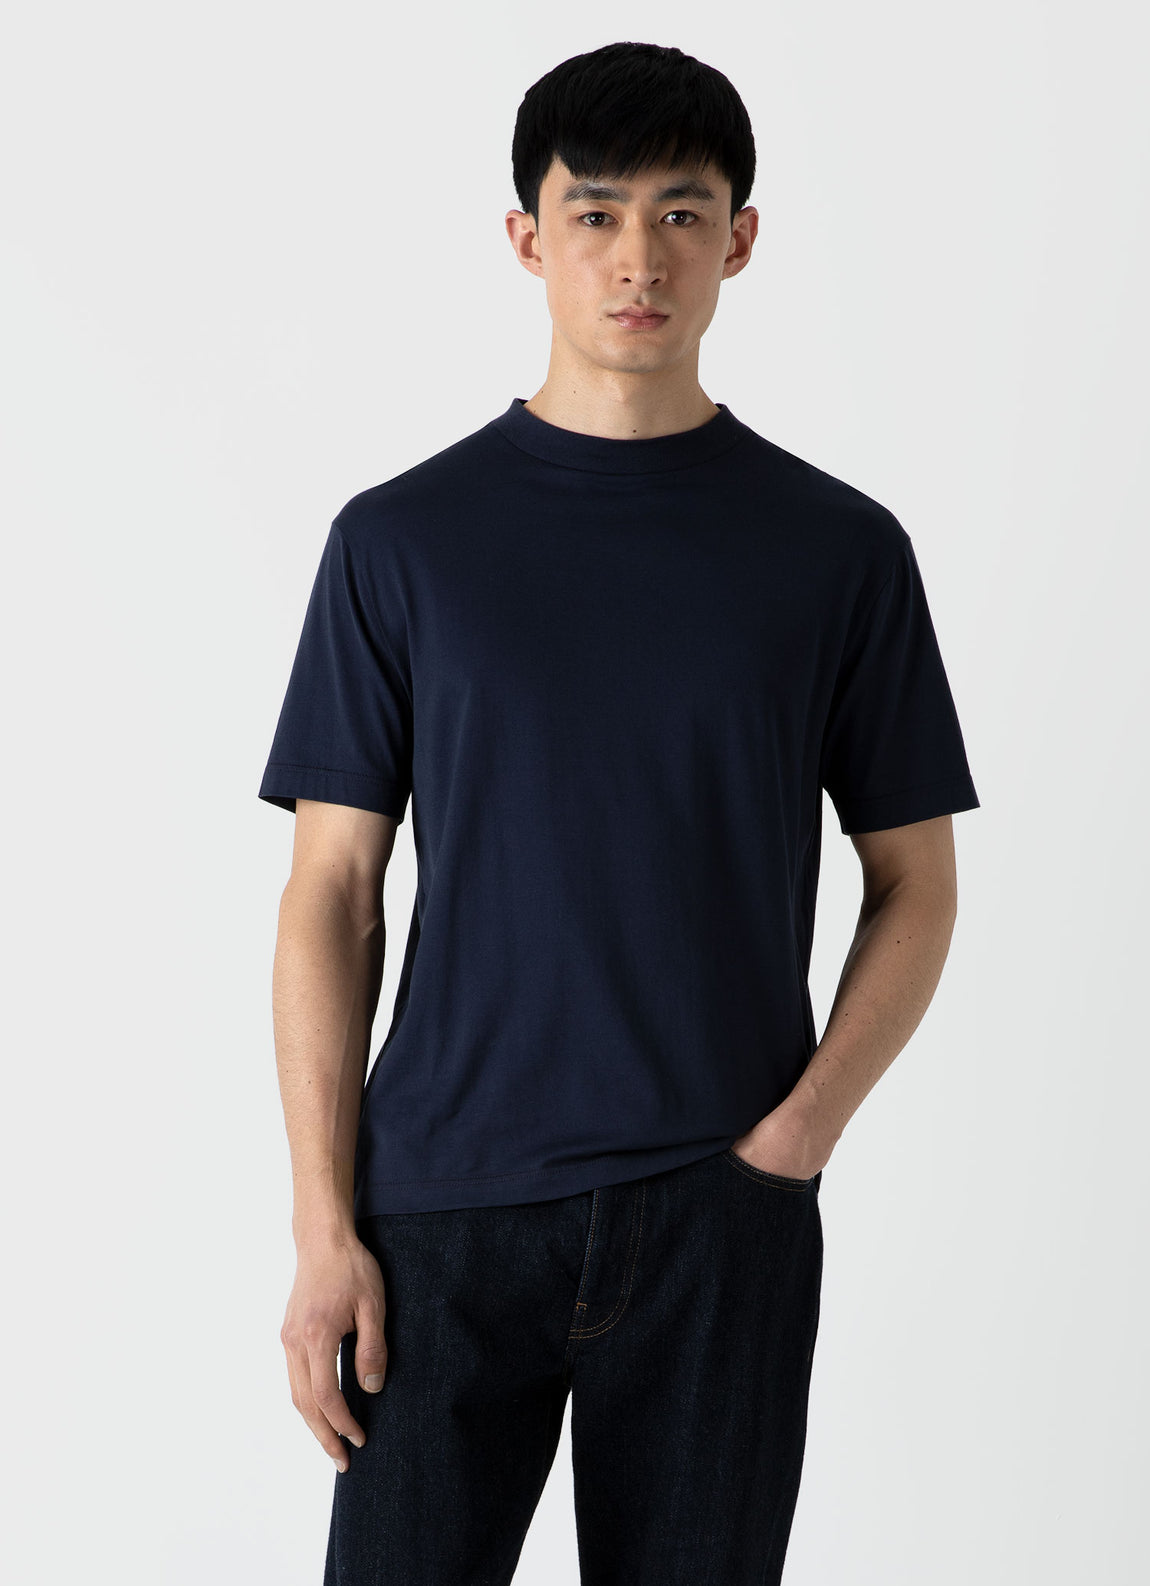 Men's Mock Neck T-shirt in Navy | Sunspel